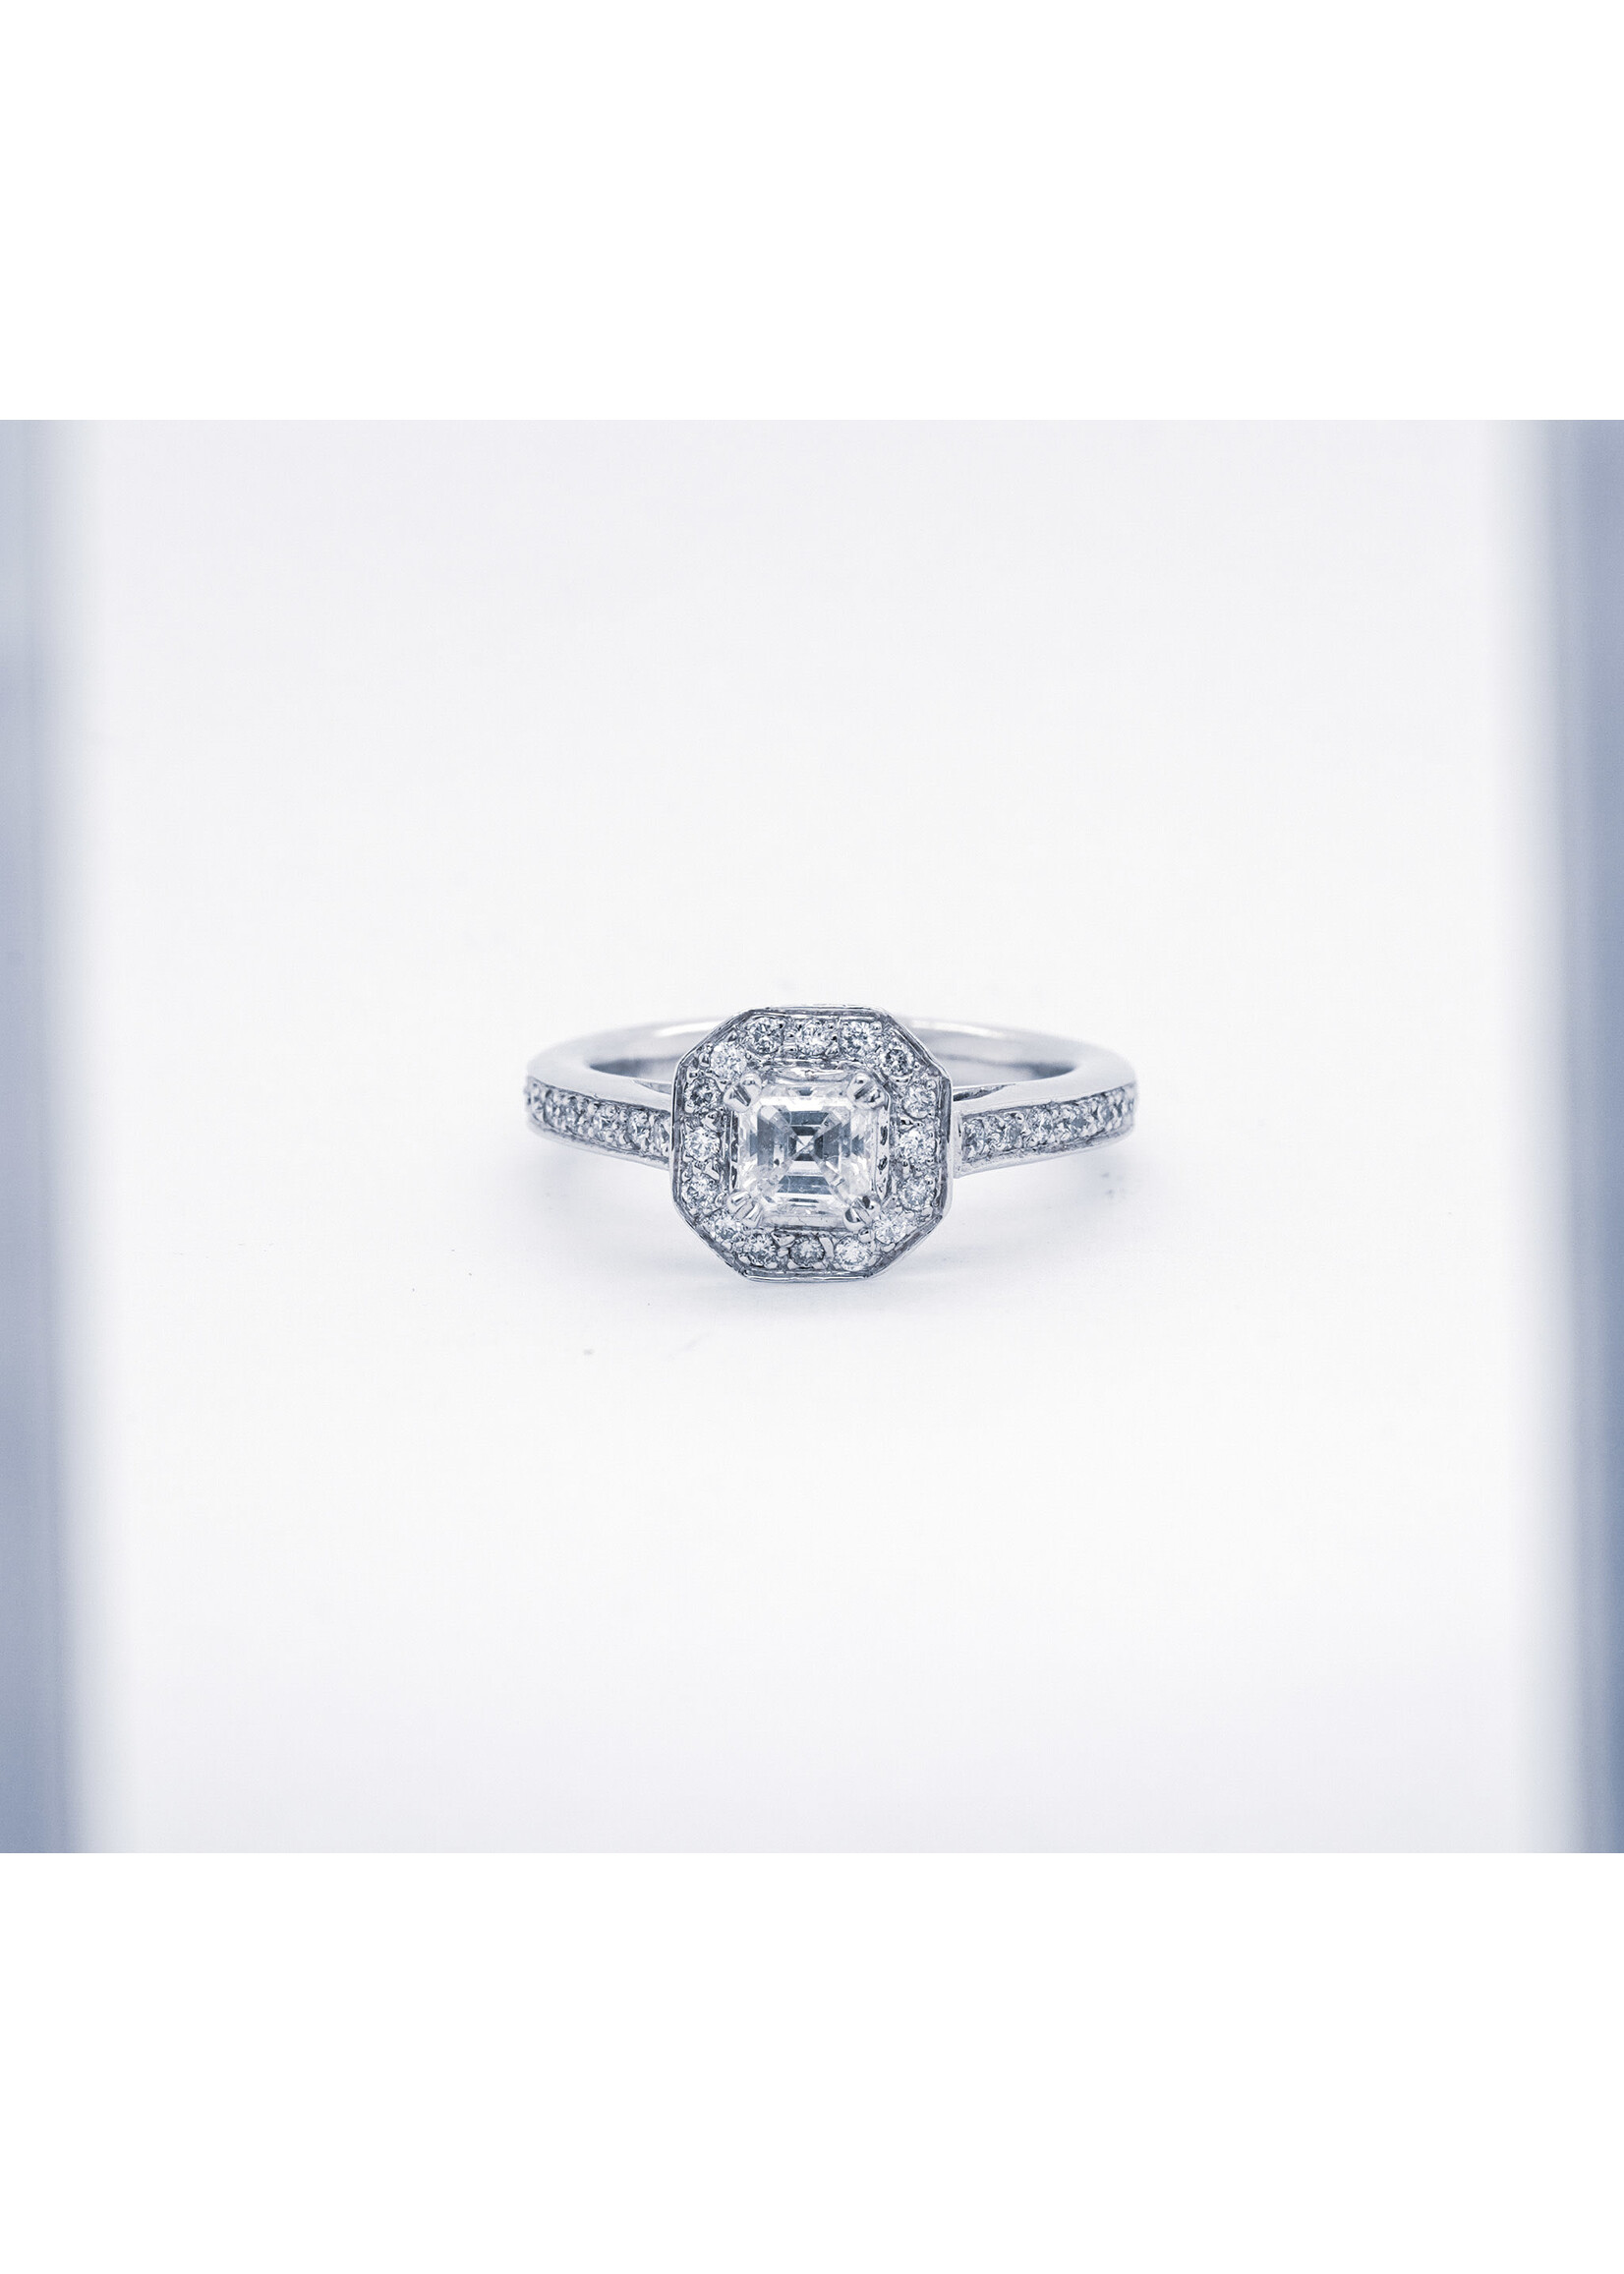 14KW 4.5g 1.0TW (.58ctr) H/SI1 Asscher Cut Diamond Halo Engagement Ring (size 5.25)